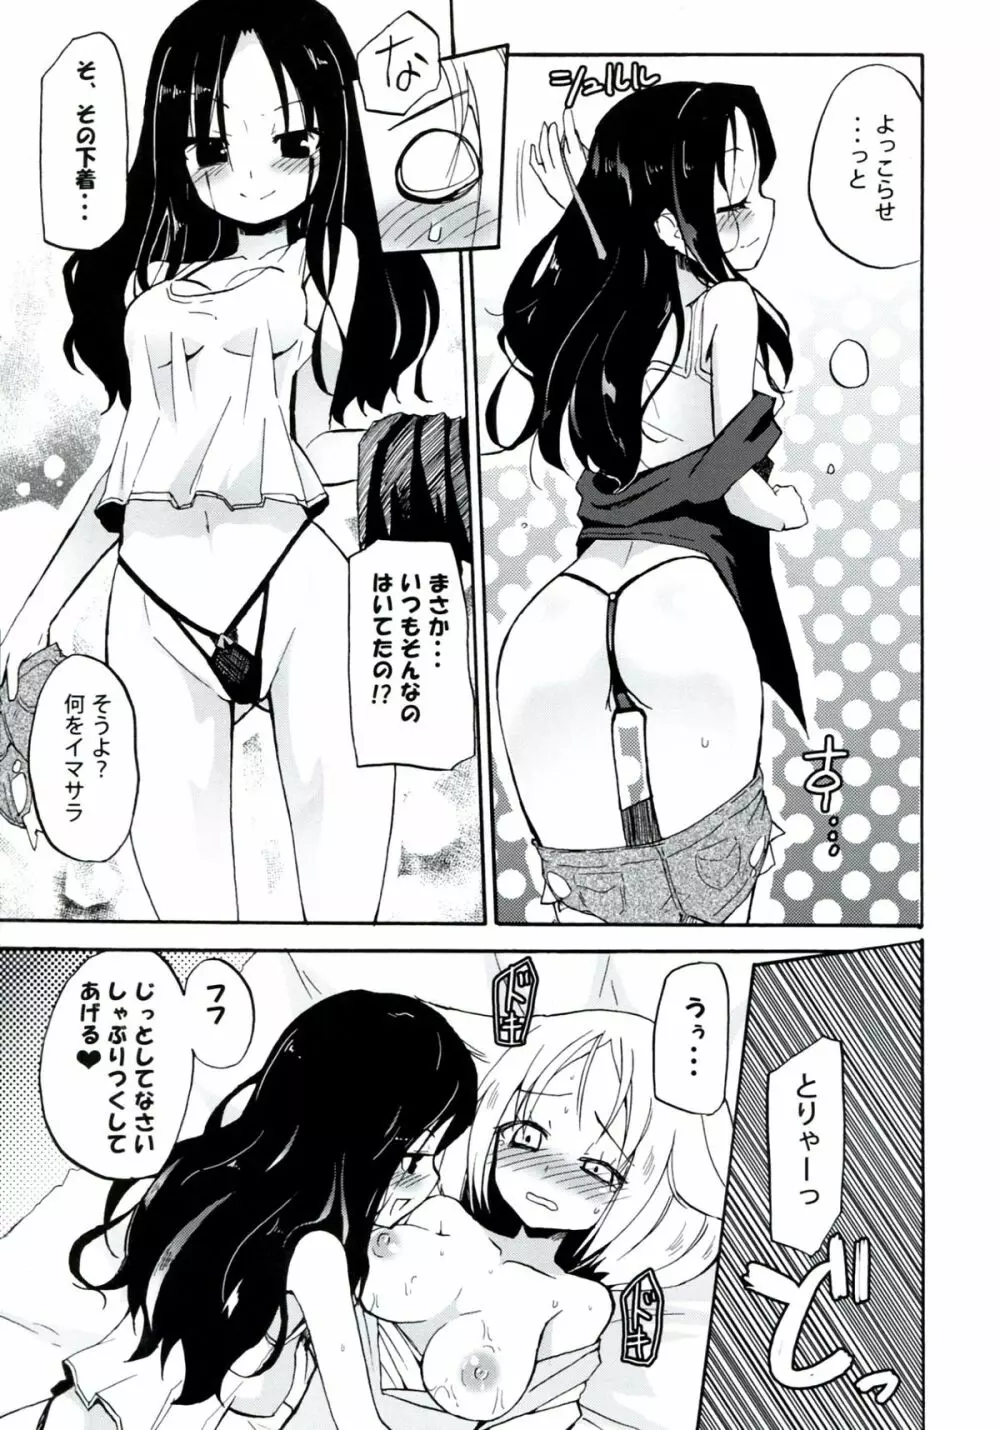 Homuraya Milk ★ Collection 2 - page33